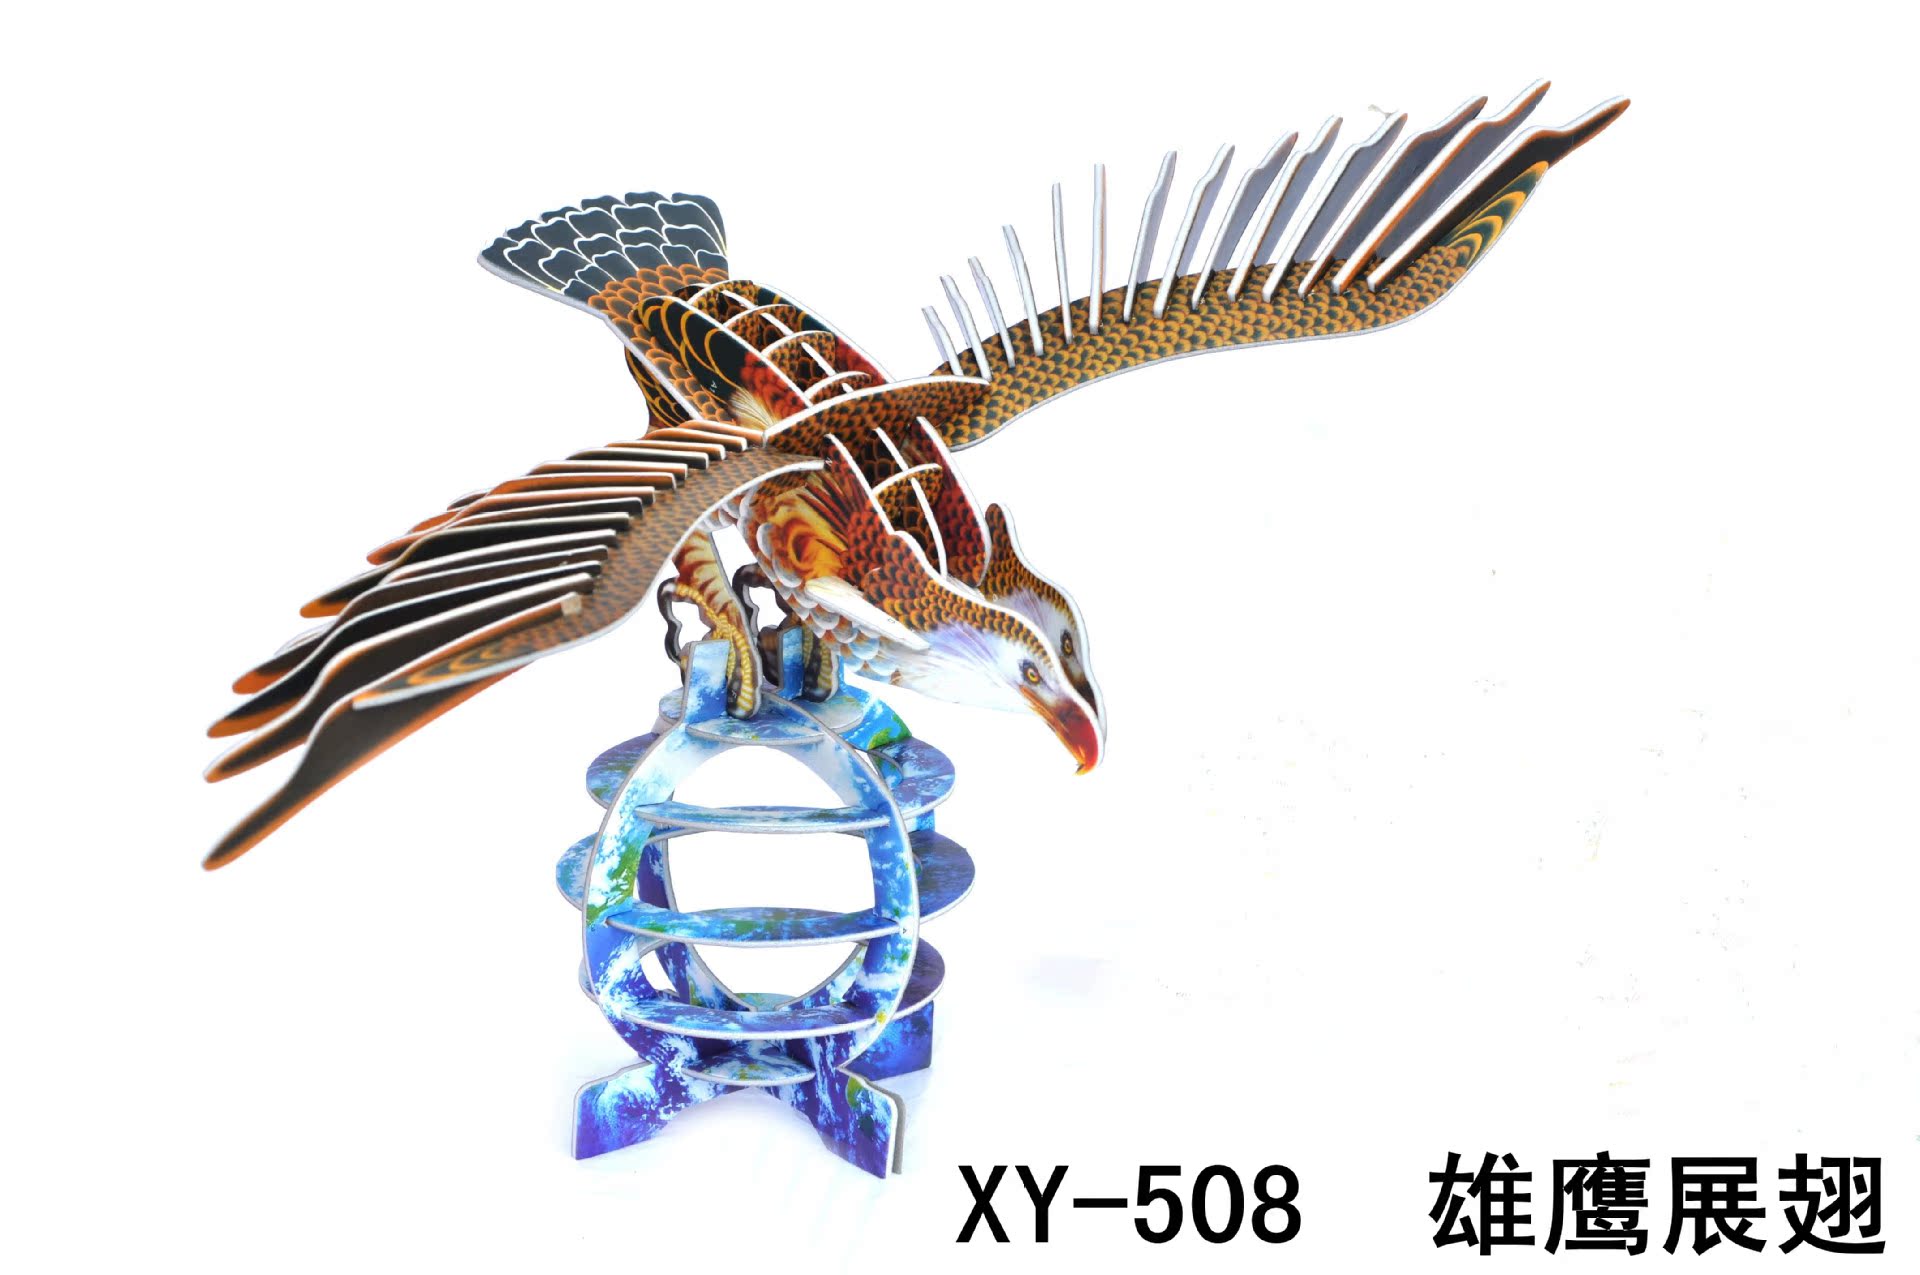 XY-508 pread eagles_副本